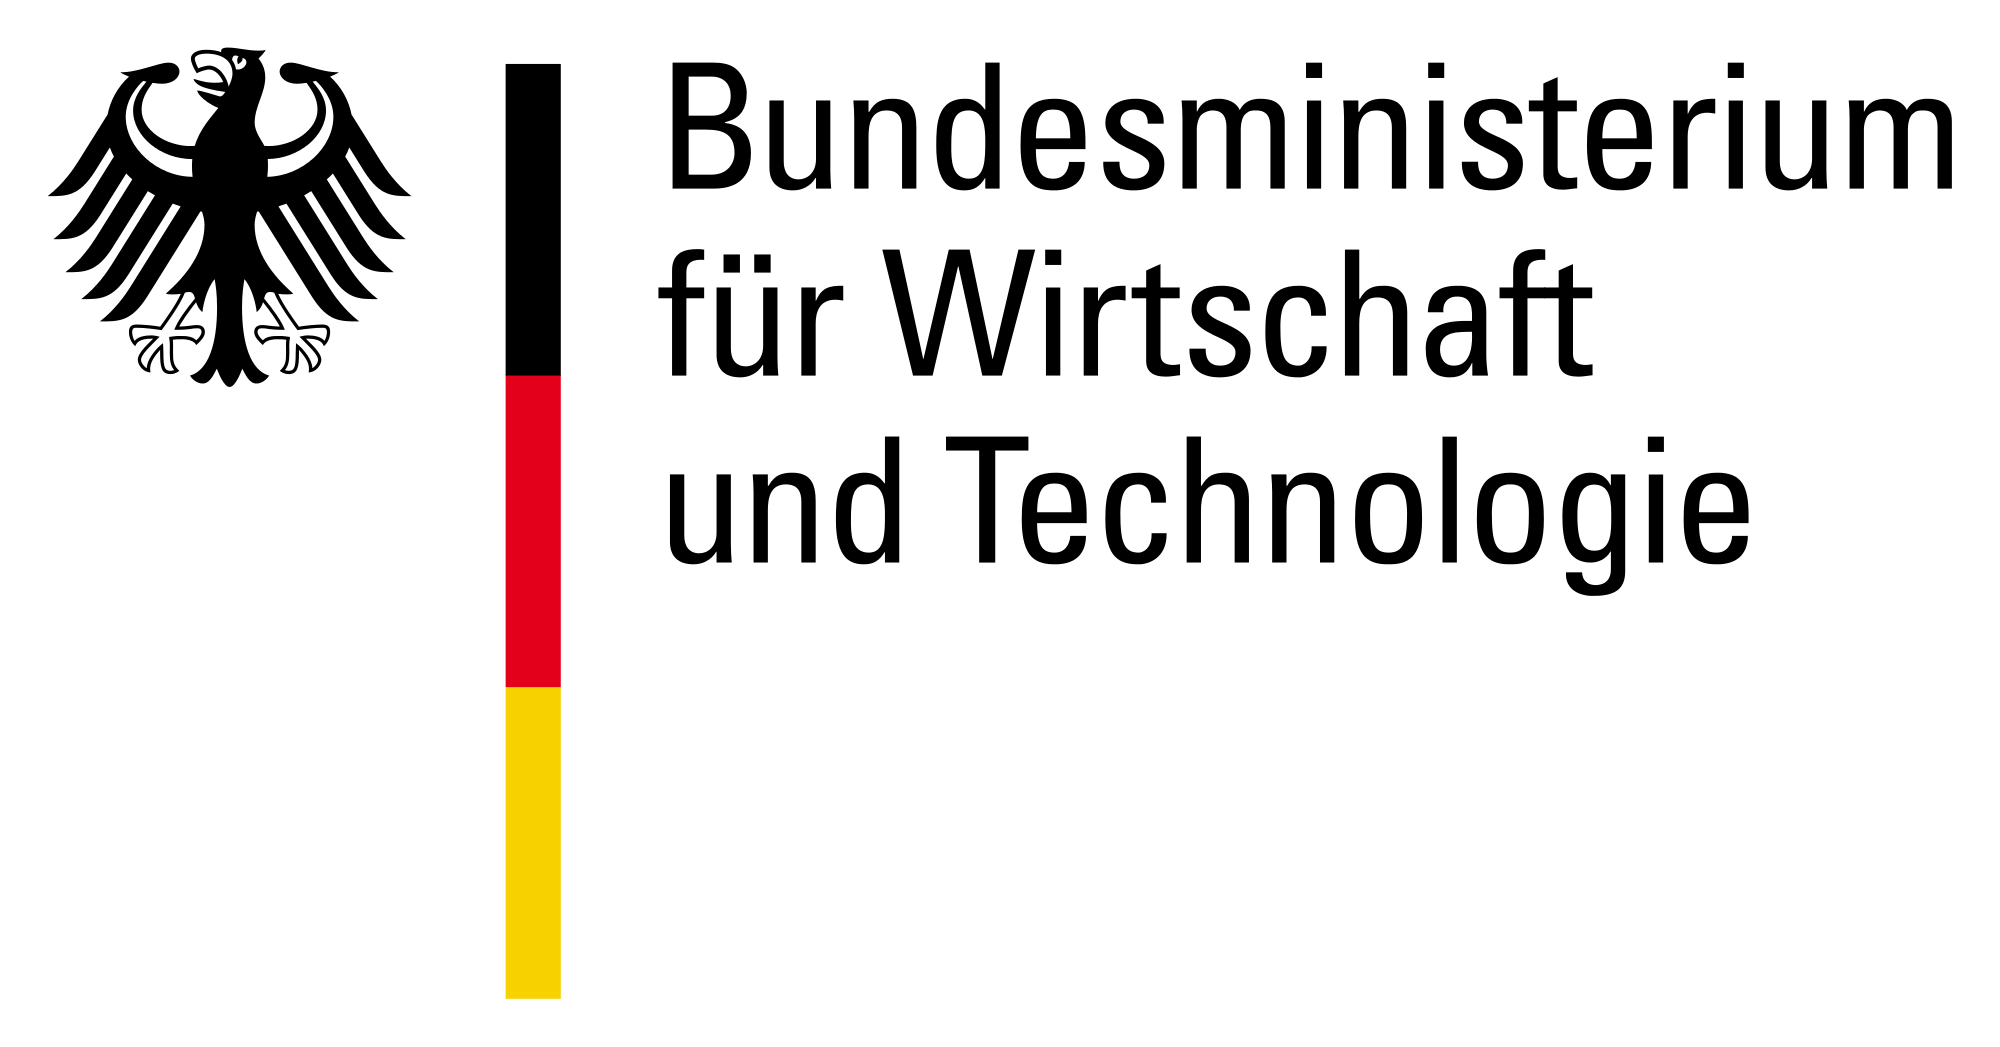 BMWi Logo